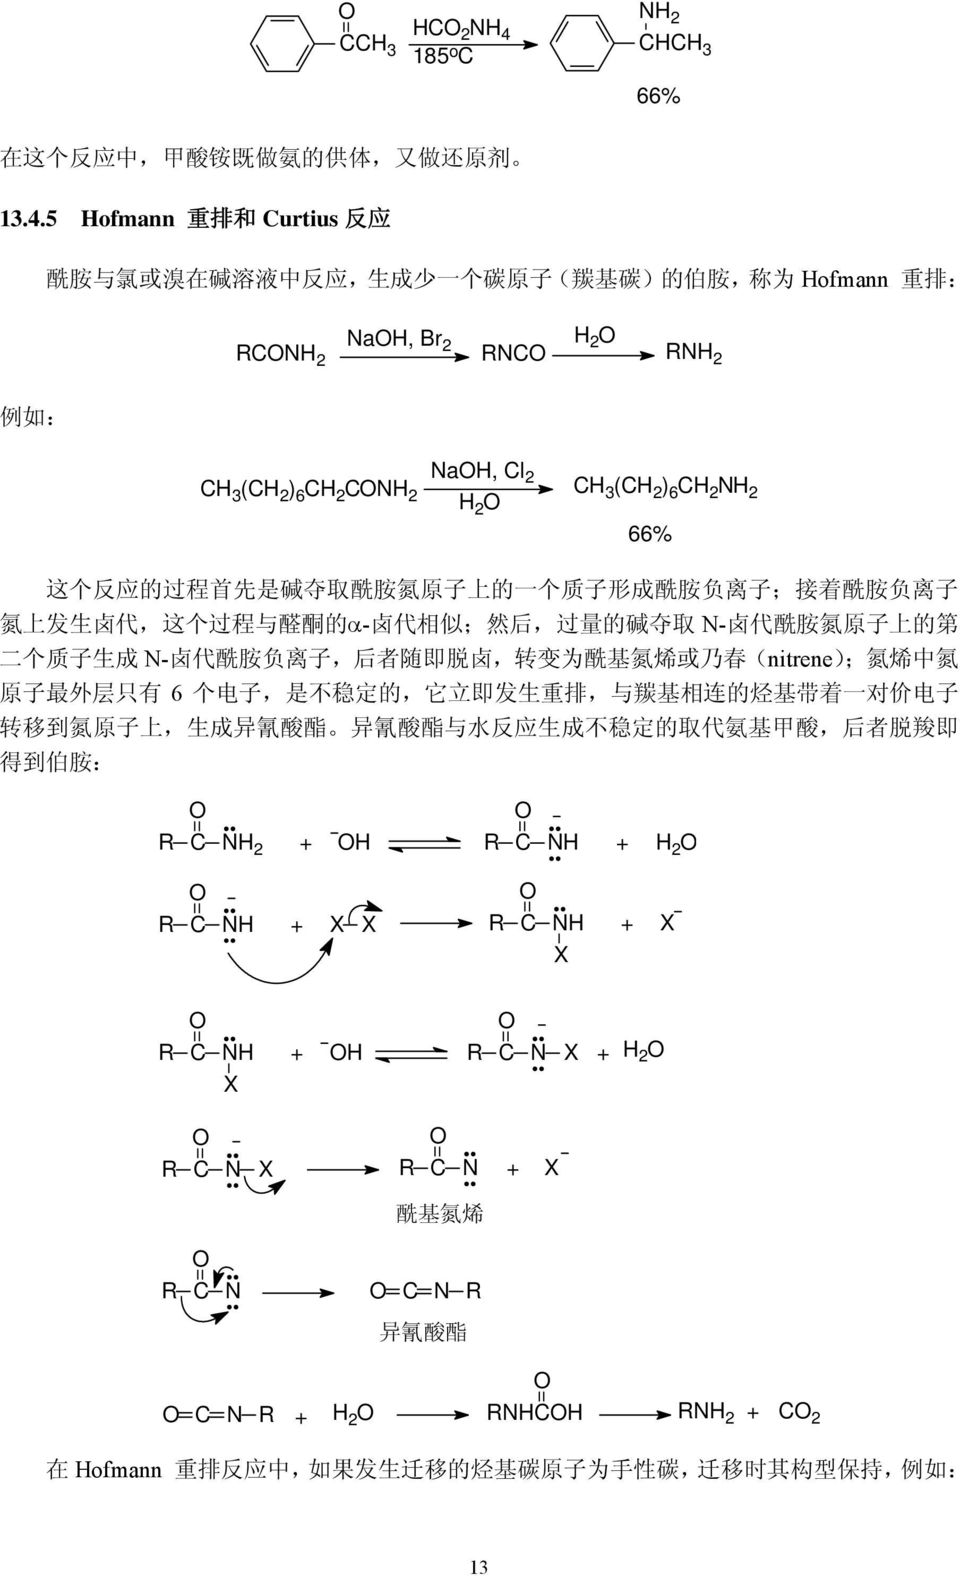 5 ofmann 重 排 和 Curtius 反 应 酰 胺 与 氯 或 溴 在 碱 溶 液 中 反 应, 生 成 少 一 个 碳 原 子 ( 羰 基 碳 ) 的 伯 胺, 称 为 ofmann 重 排 : RC a, 2 RC 2 R 例 如 : C 3 (C 2 ) 6 C 2 C a, Cl 2 2 C 3 (C 2 ) 6 C 2 66% 这 个 反 应 的 过 程 首 先 是 碱 夺